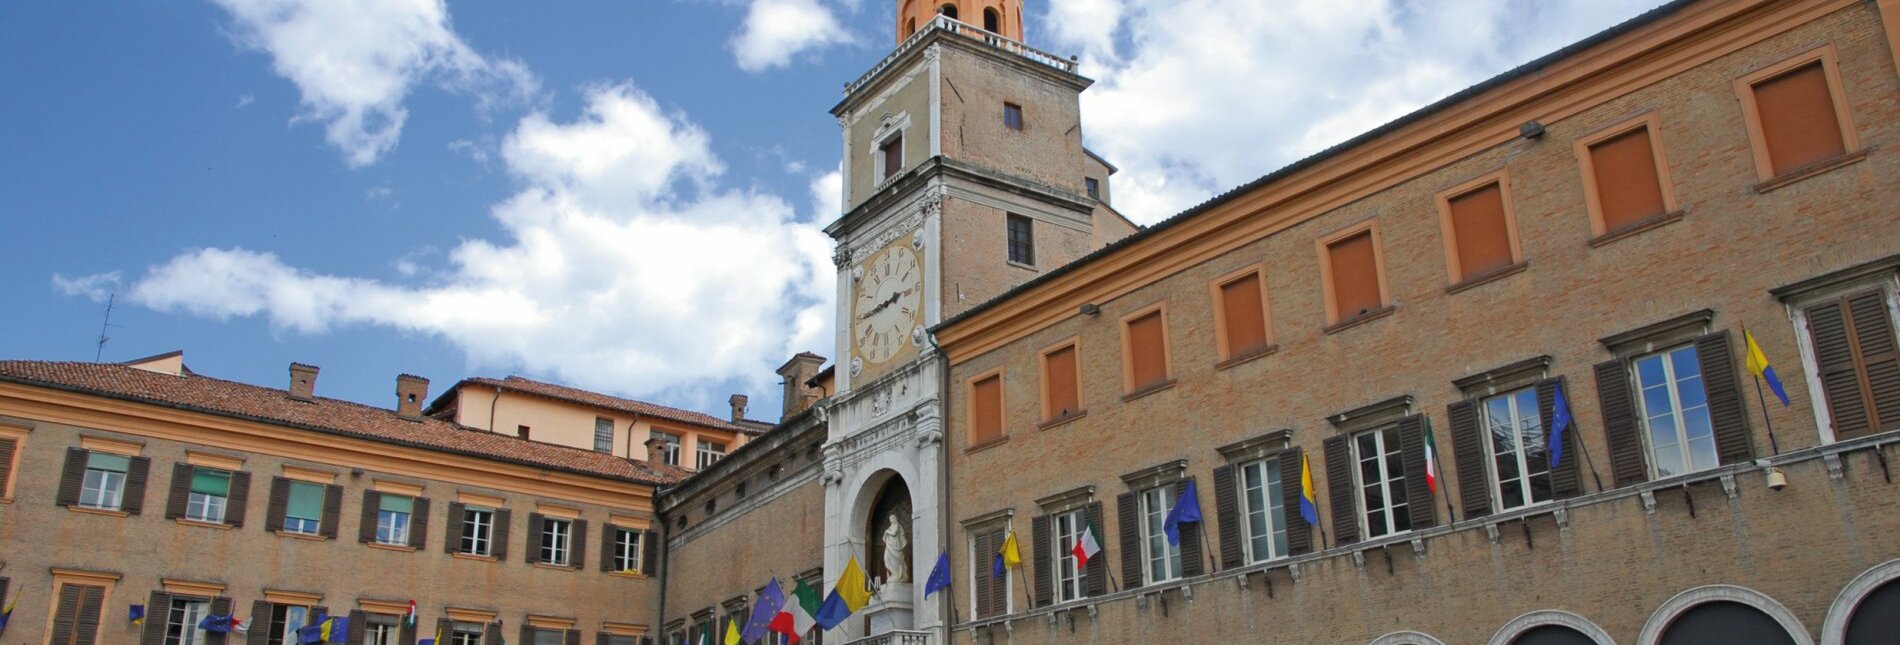 Rathaus am Piazza Grande in Modena